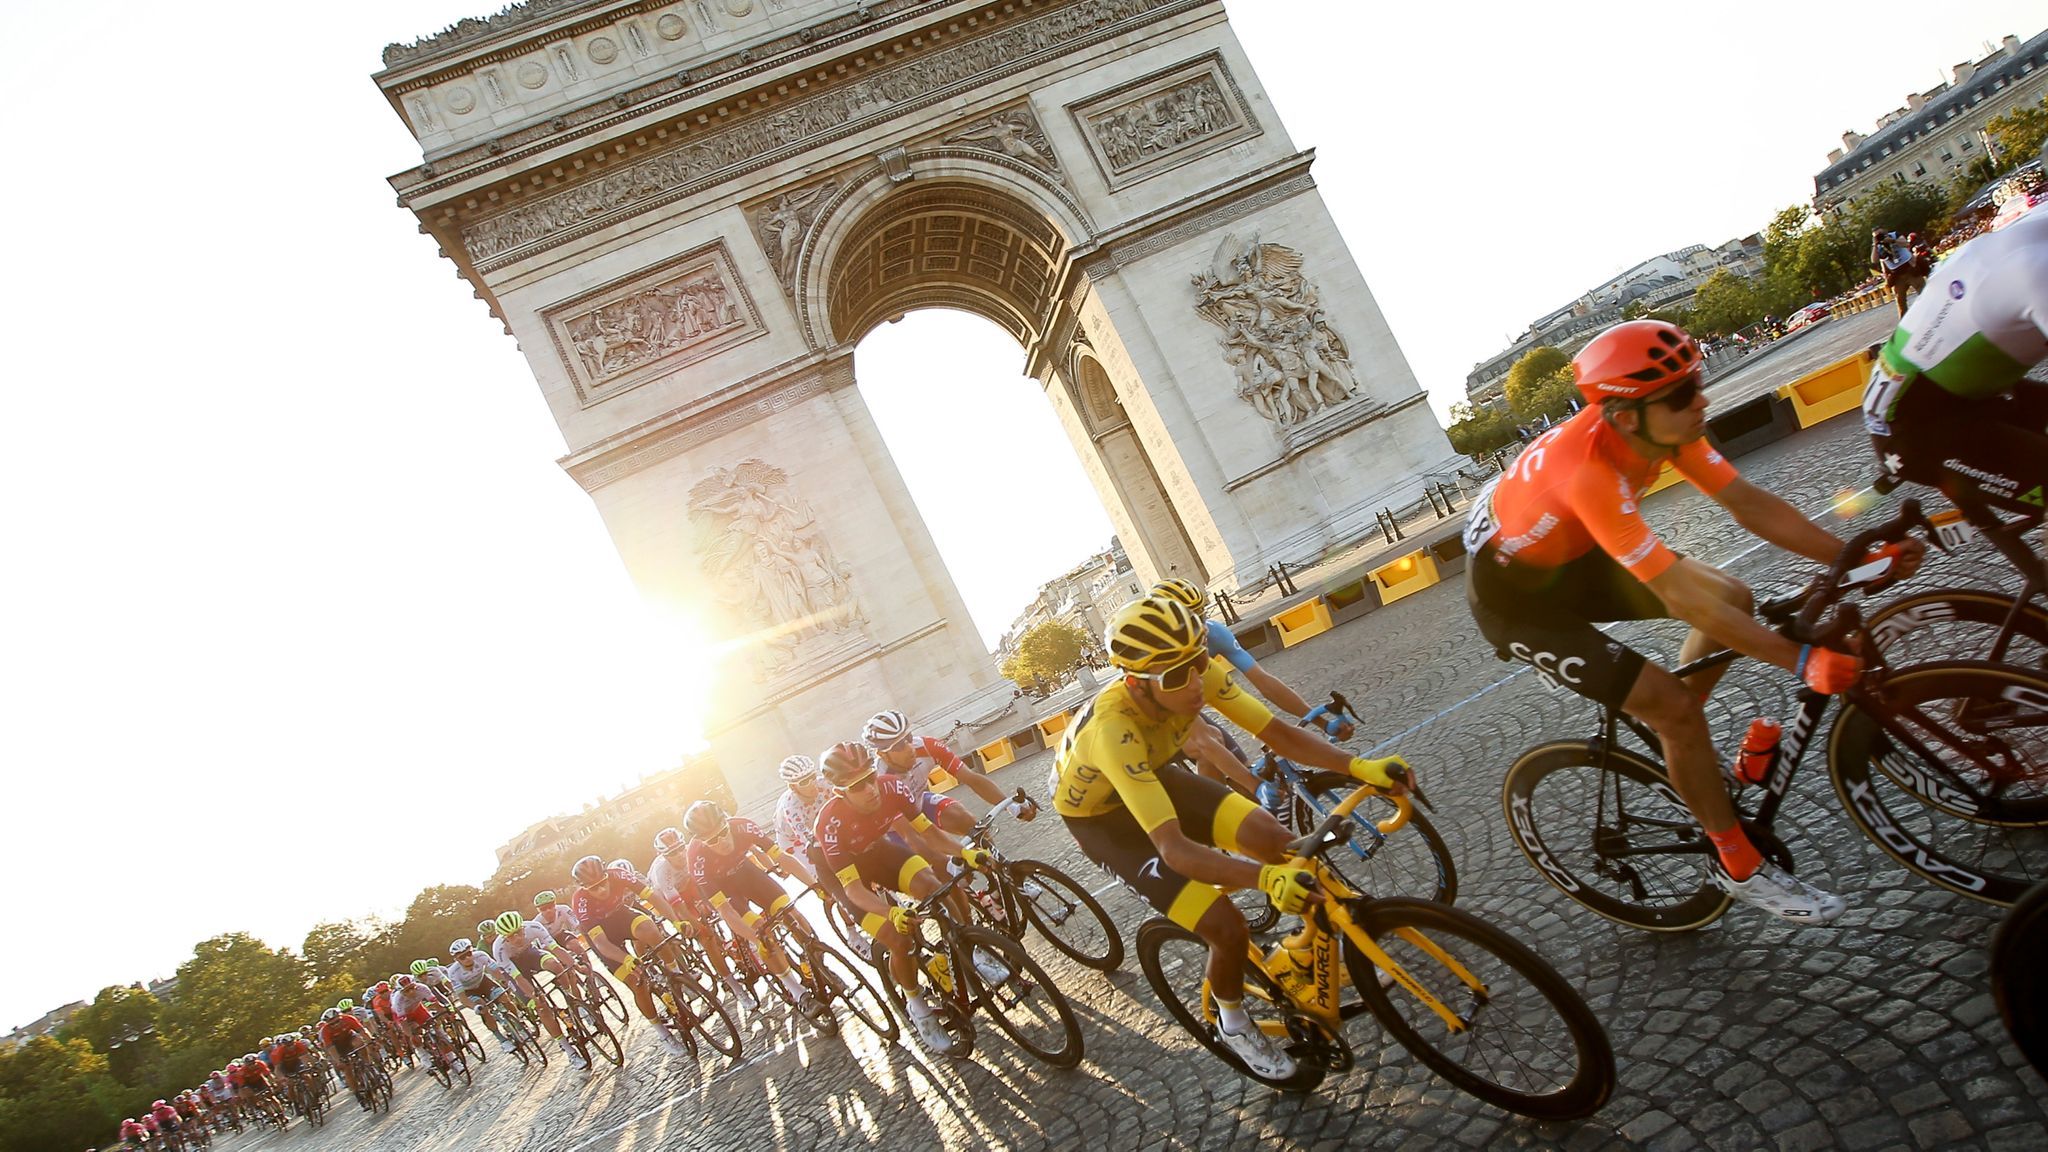 Tour de France 2020: An edition like no other